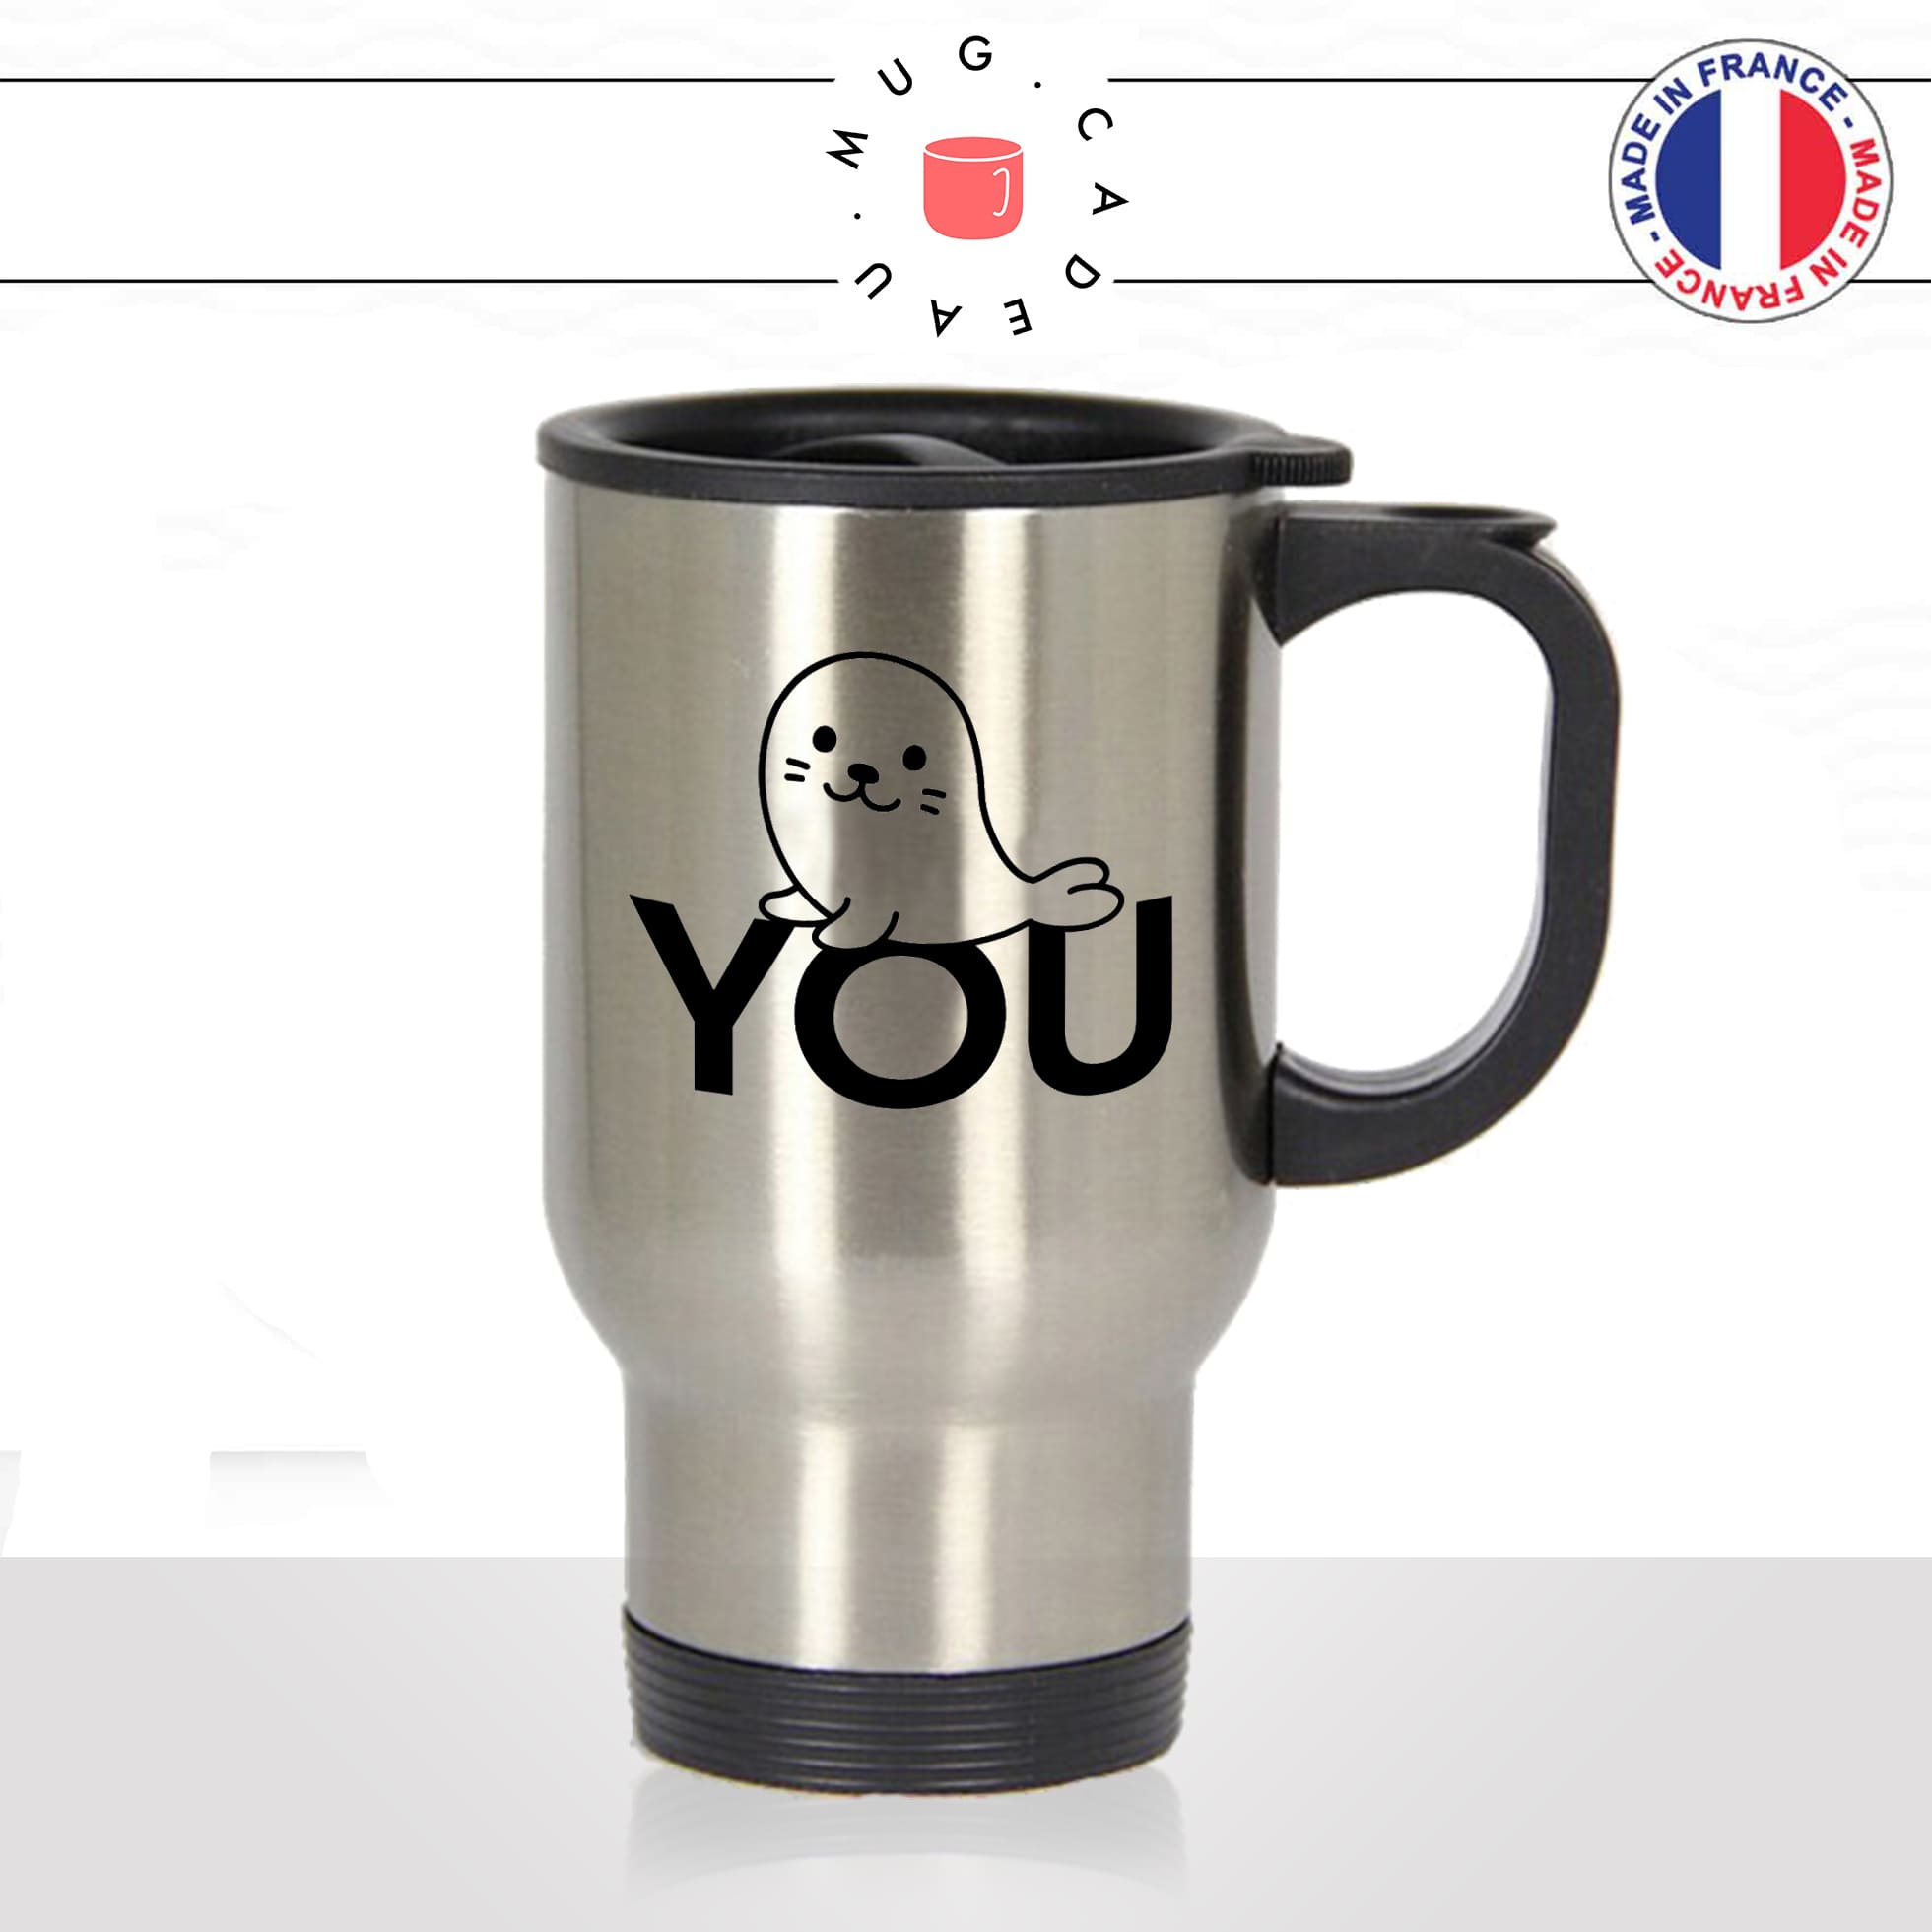 mug-tasse-thermos-isotherme-voyage-phoque-you-dessin-animal-fuck-u-insulte-mignon-humour-fun-idée-cadeau-originale-cool2